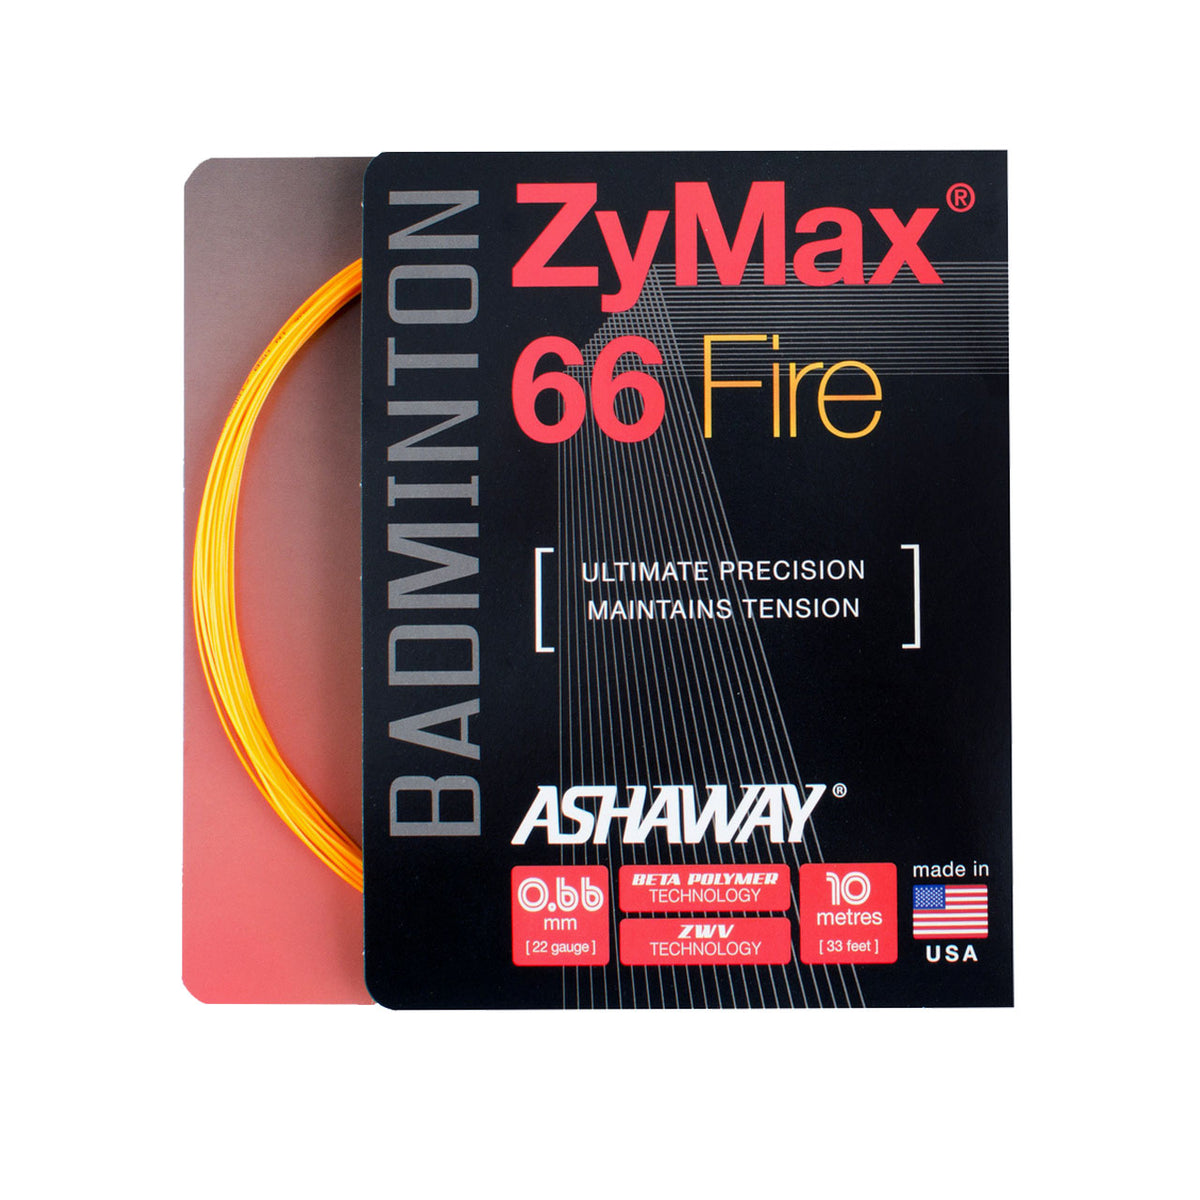 Ashaway ZyMax 66 Fire String (10m Set) Orange